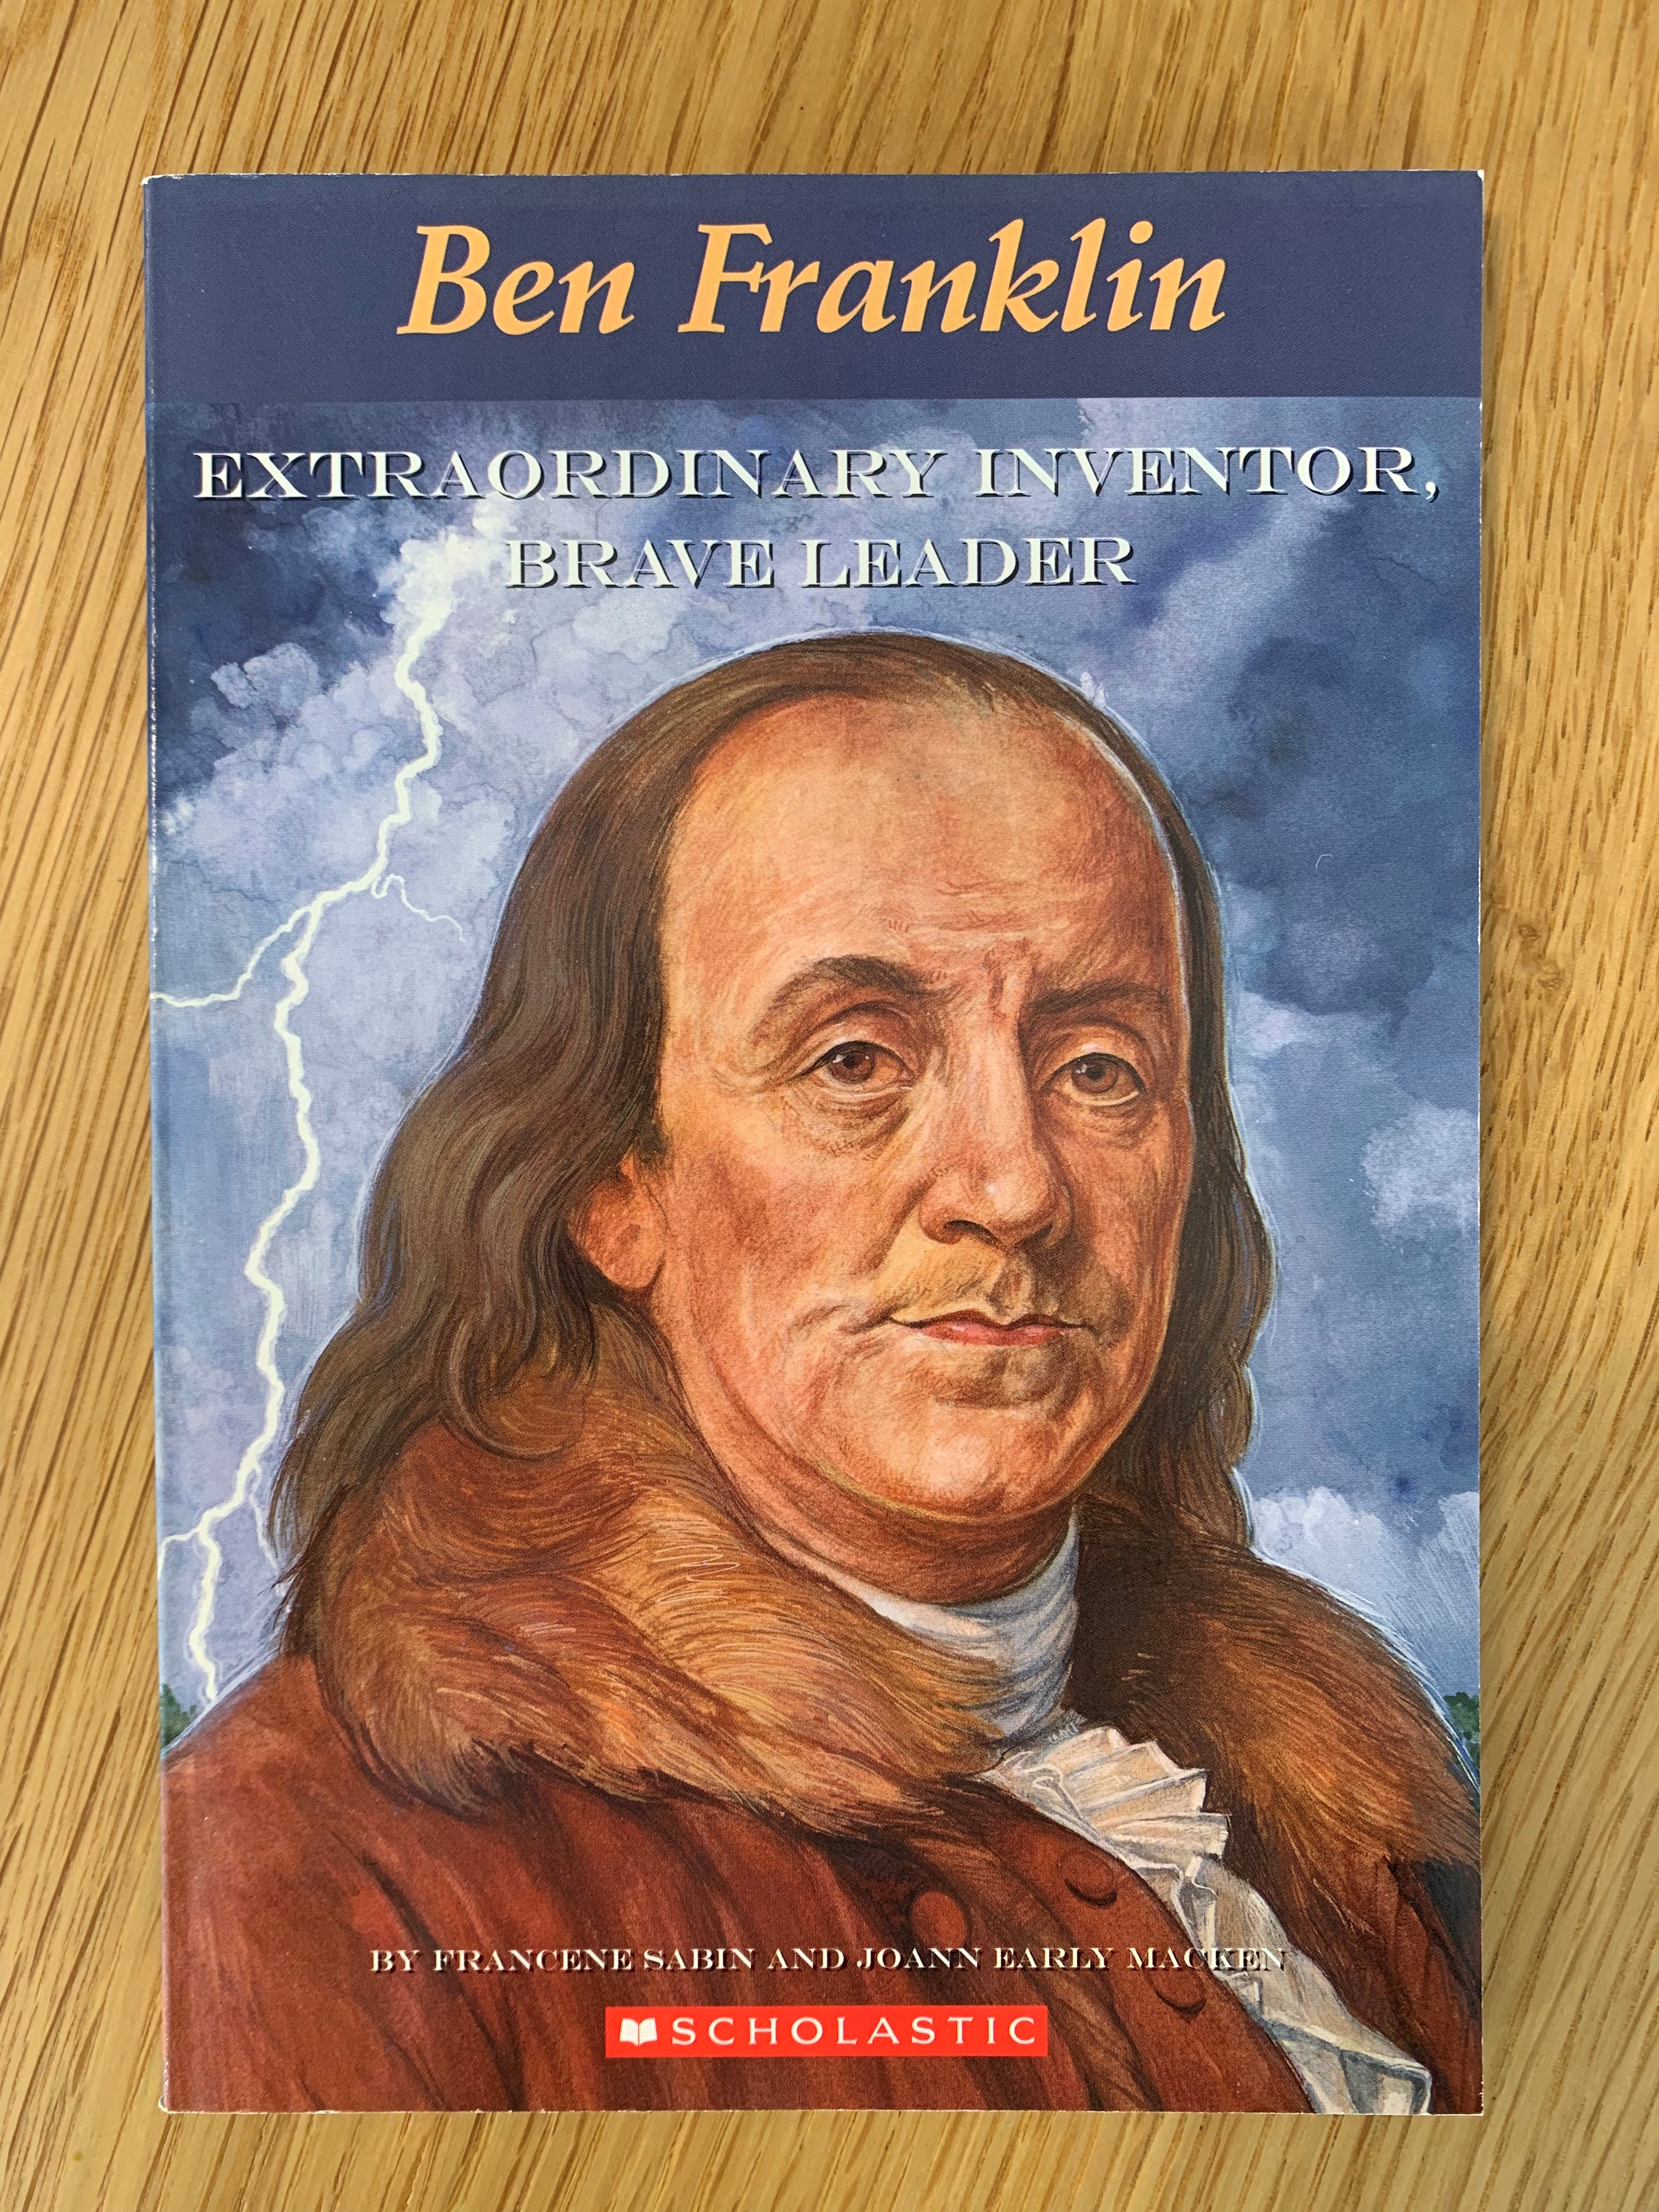 Throwback Thursday: Happy birthday, Ben Franklin